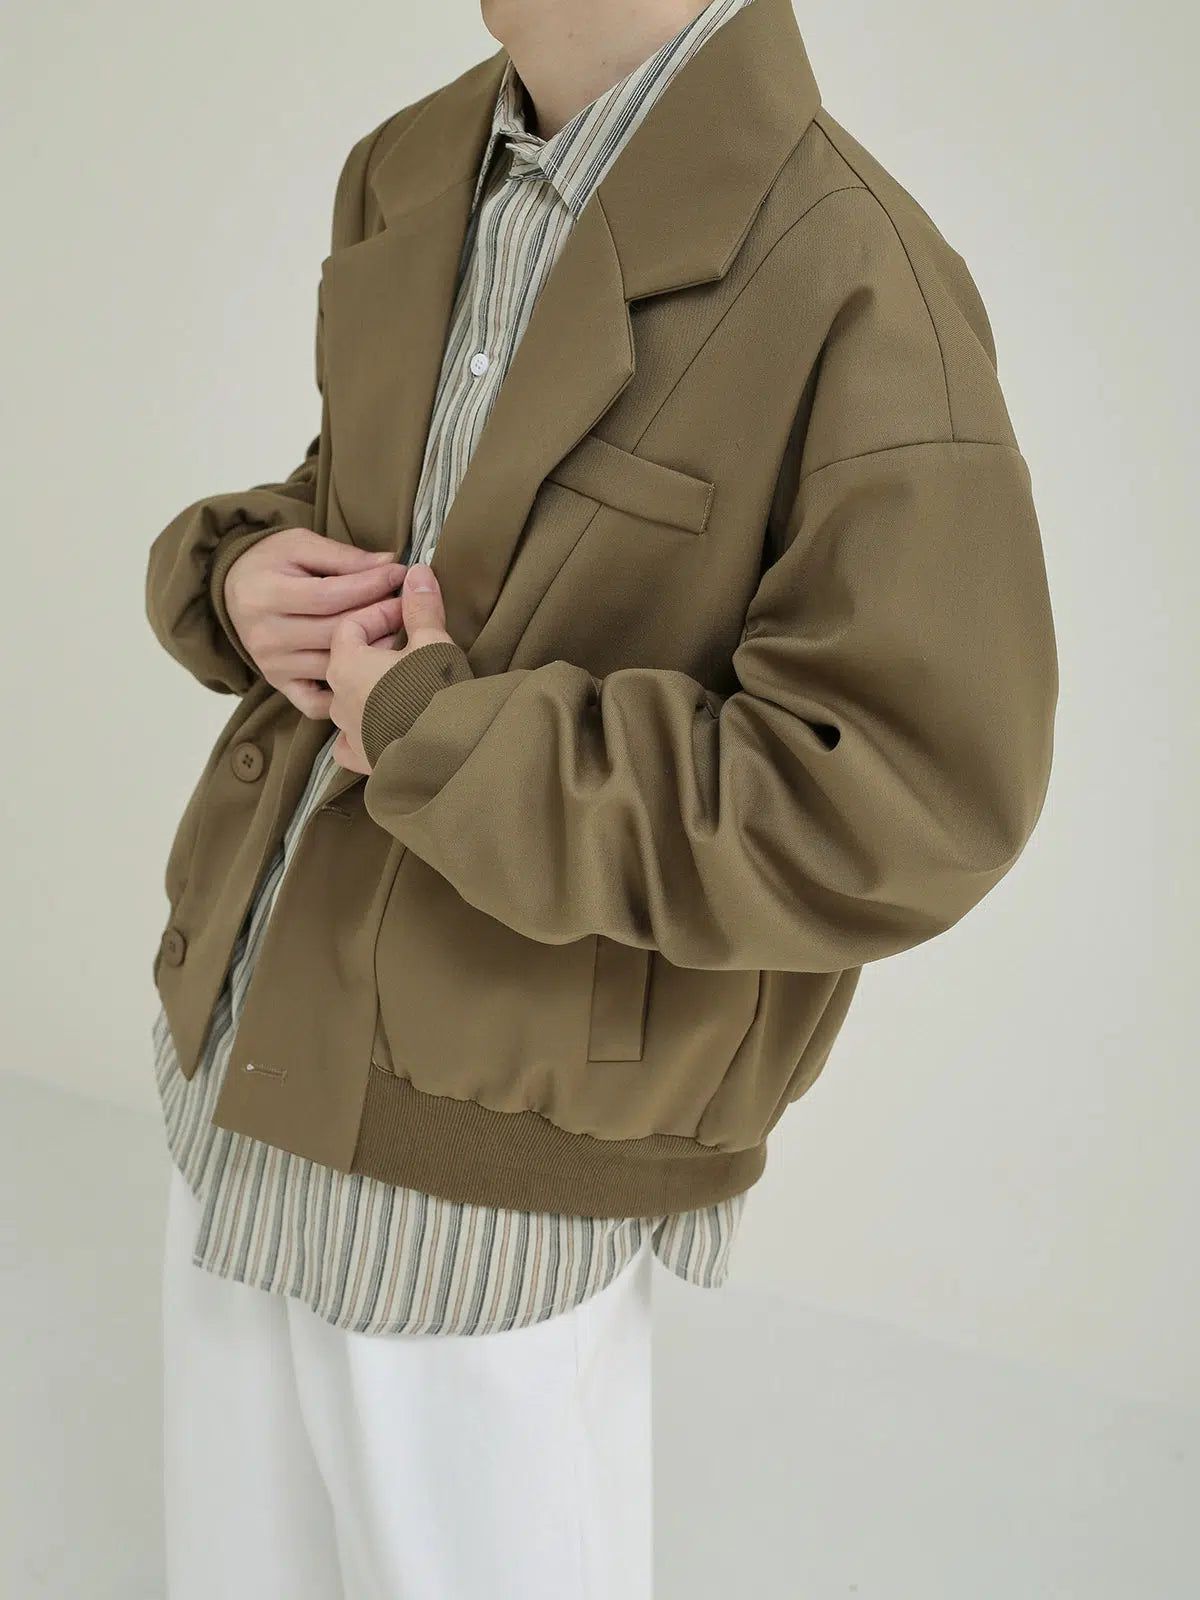 Zhou Two-Buttons Blazer Jacket-korean-fashion-Jacket-Zhou's Closet-OH Garments